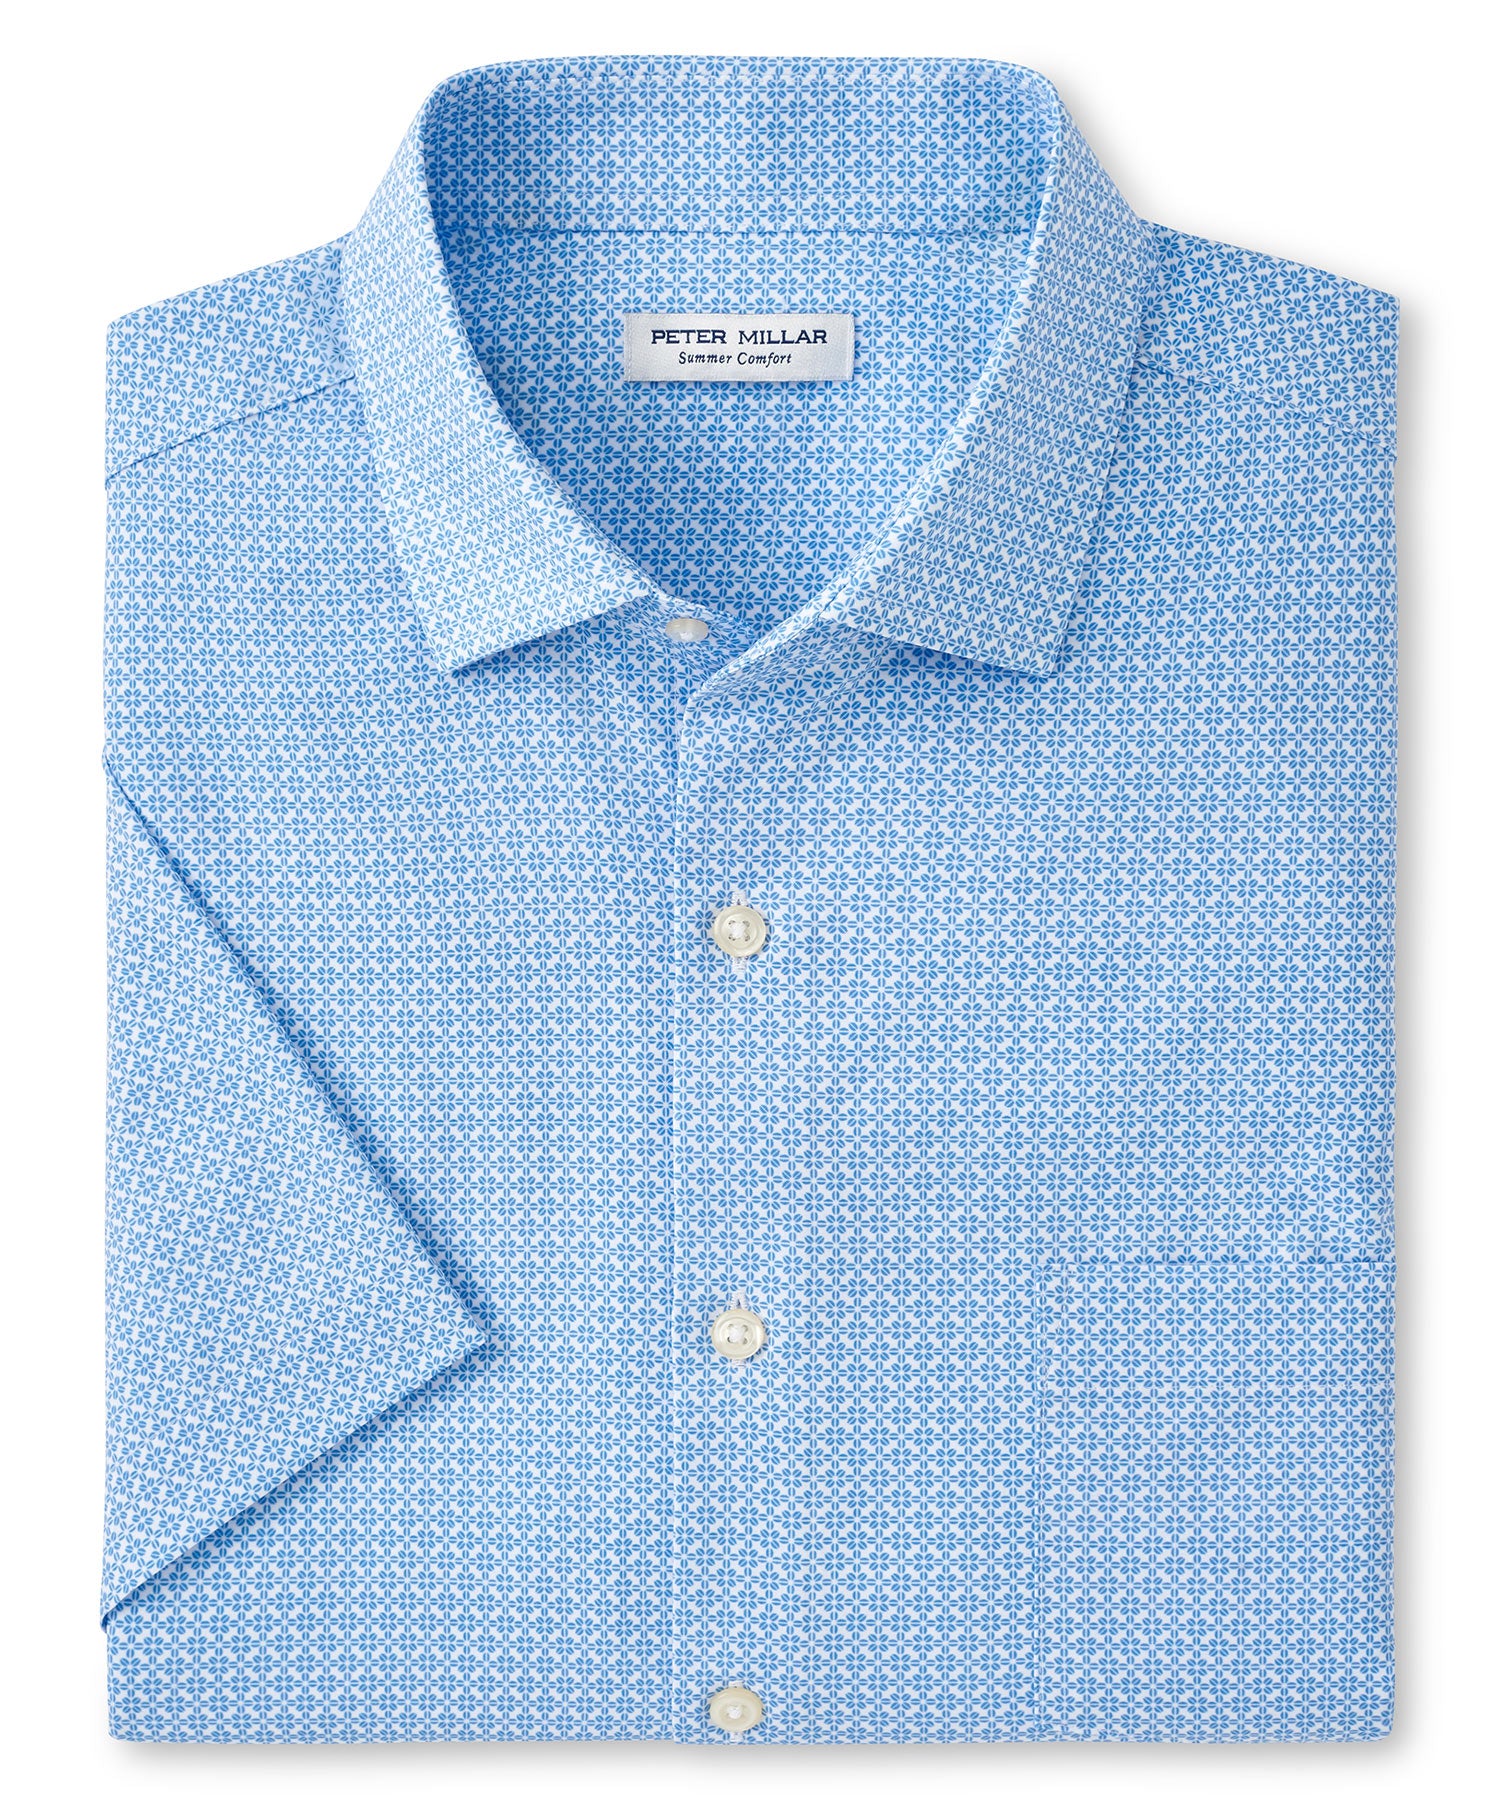 Peter Millar Geo Print Short Sleeve Spread Collar Sport Shirt, Men's Big & Tall